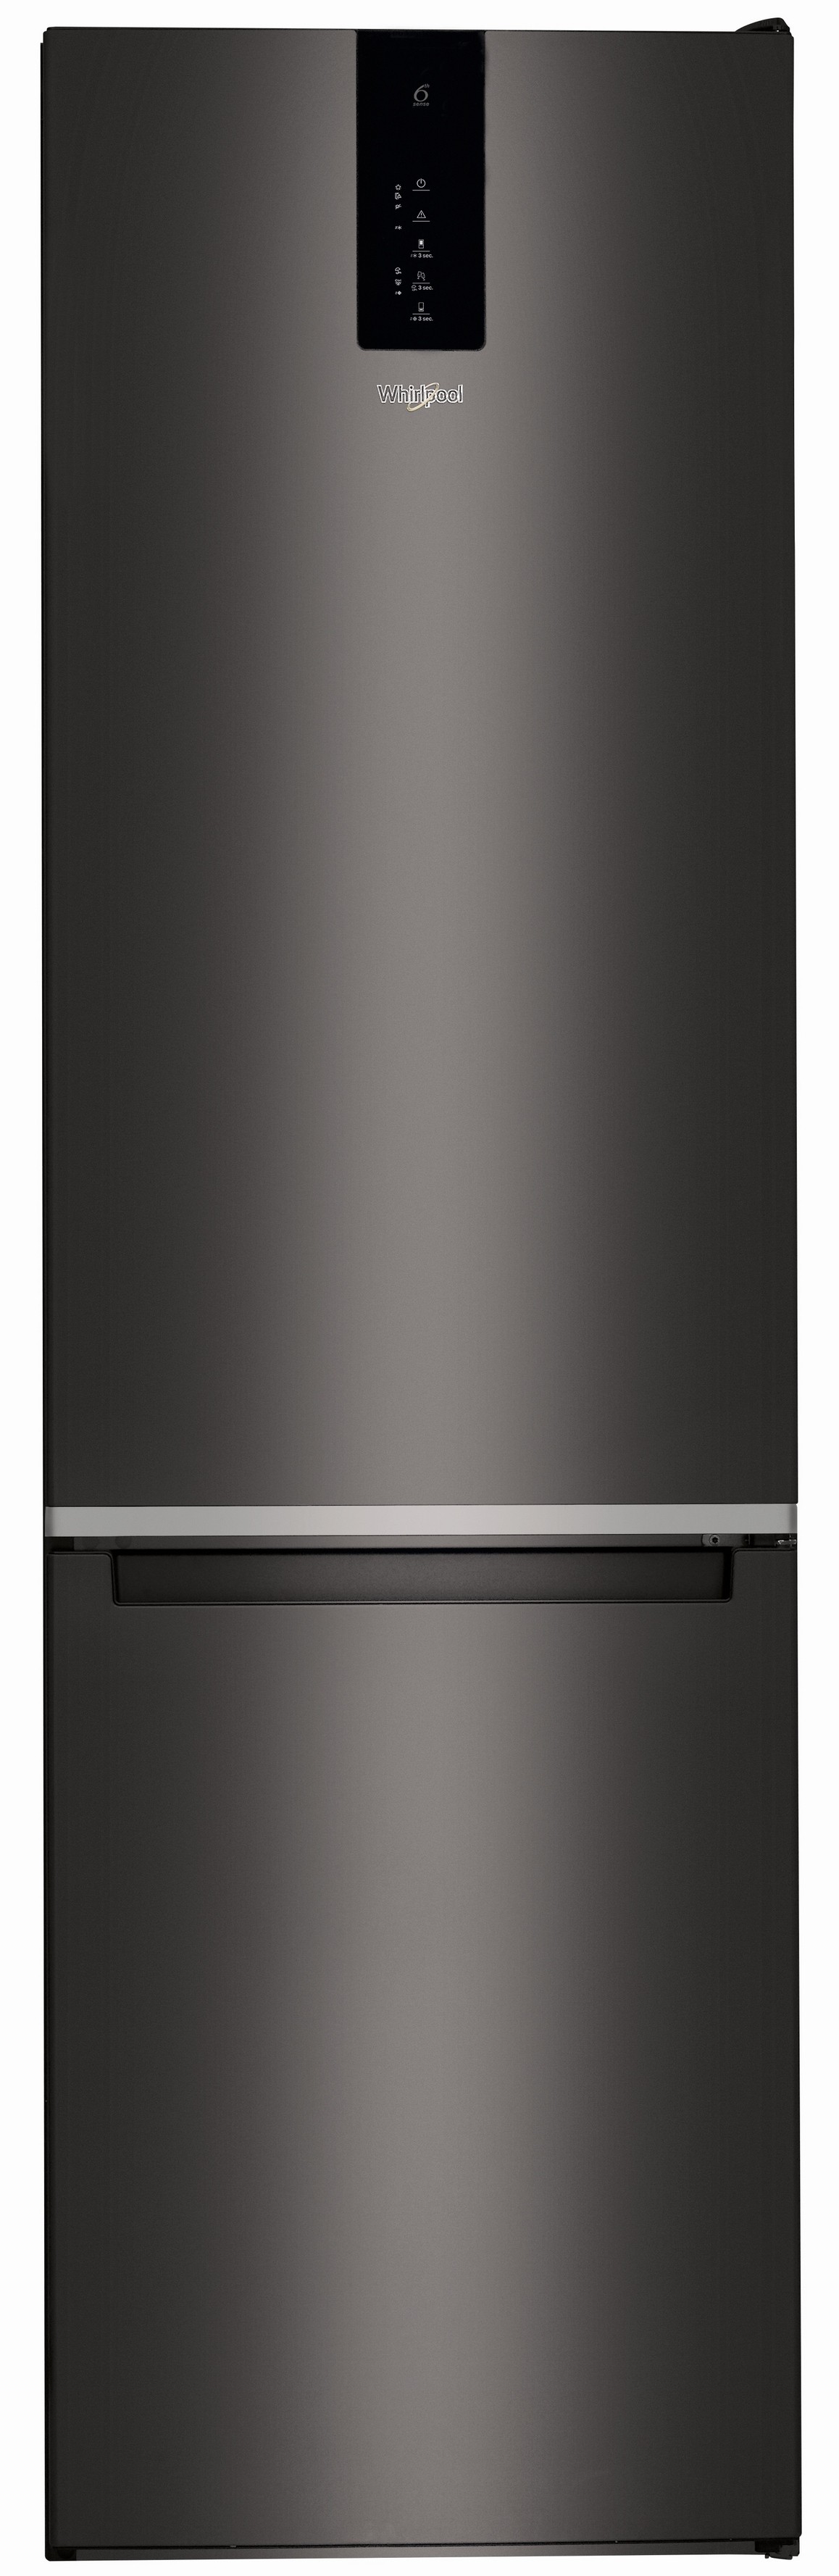 Холодильник Whirlpool W9 931A KS  в интернет-магазине, главное фото